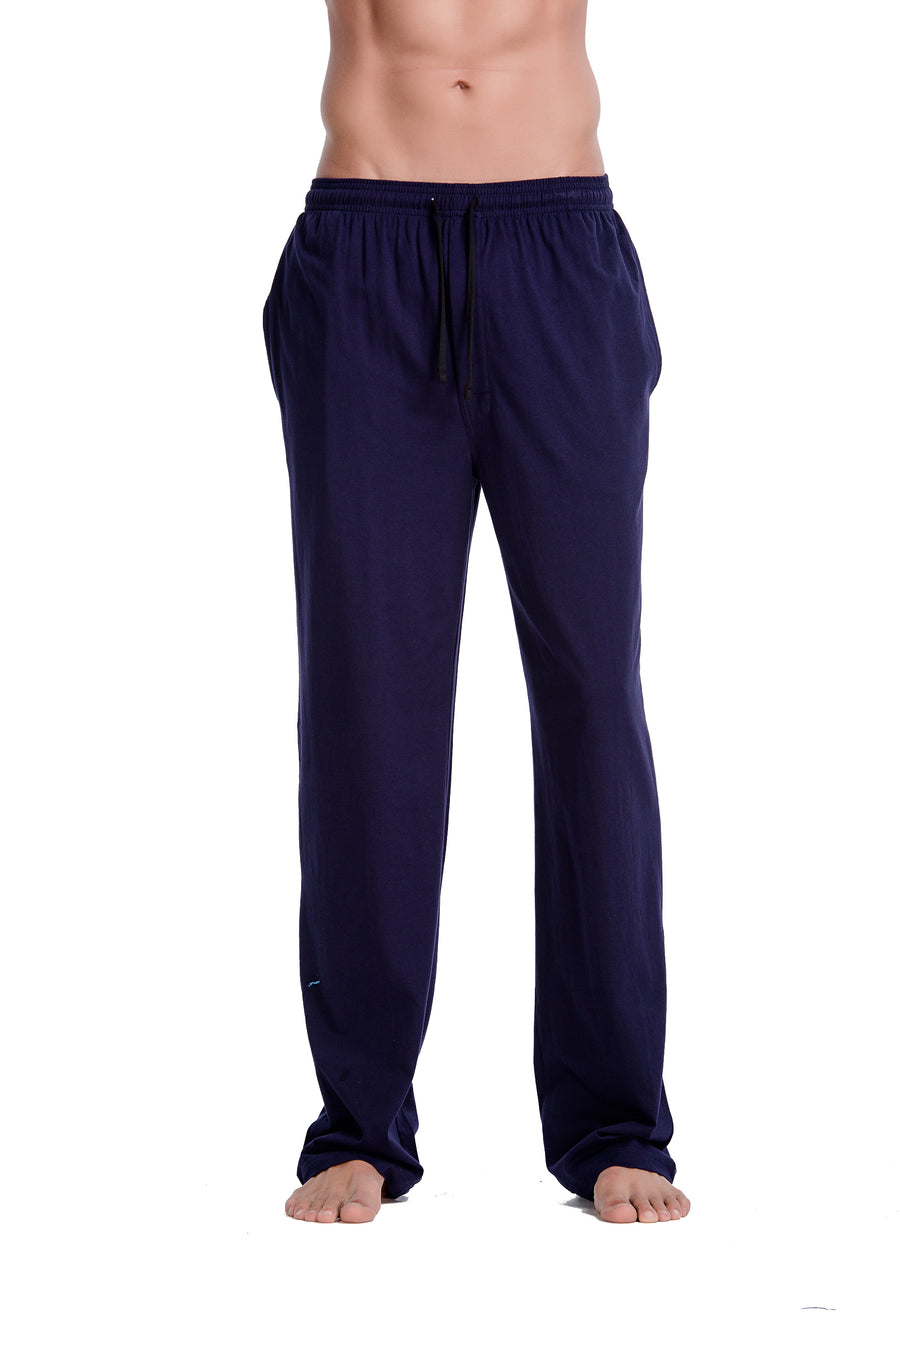 CYZ Men's 100% Cotton Jersey Knit Pajama Pants/Lounge Pants With Draws – CYZ  Collection